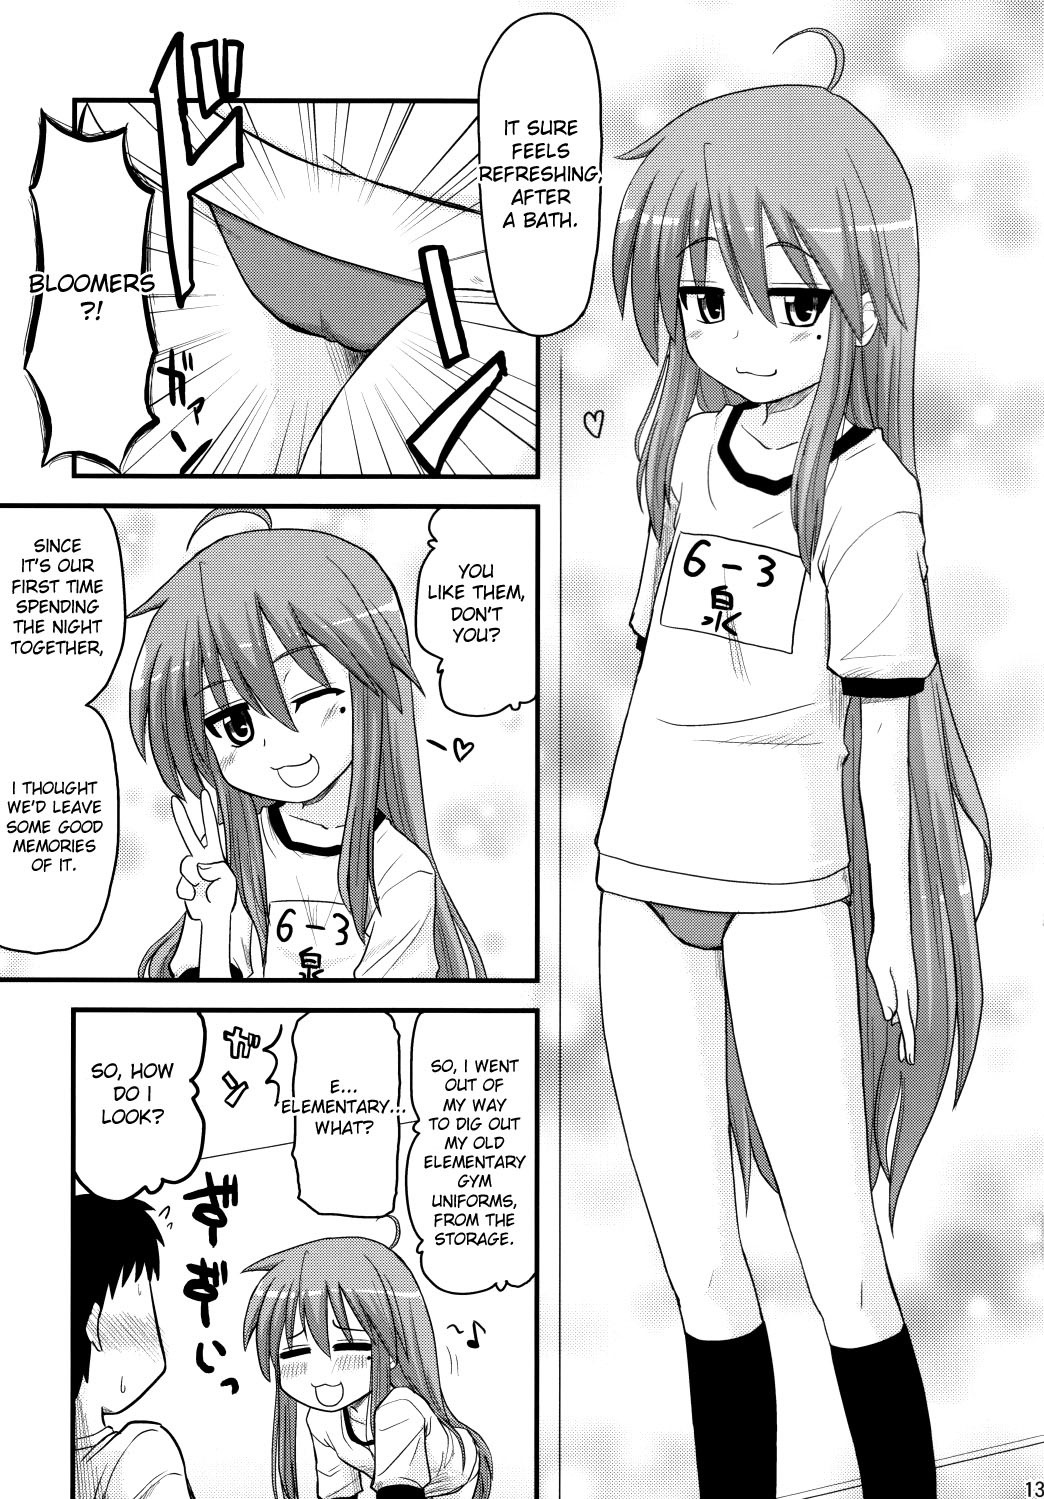 Konata and Oh-zu 4 people each and every one + 1 hentai manga picture 9